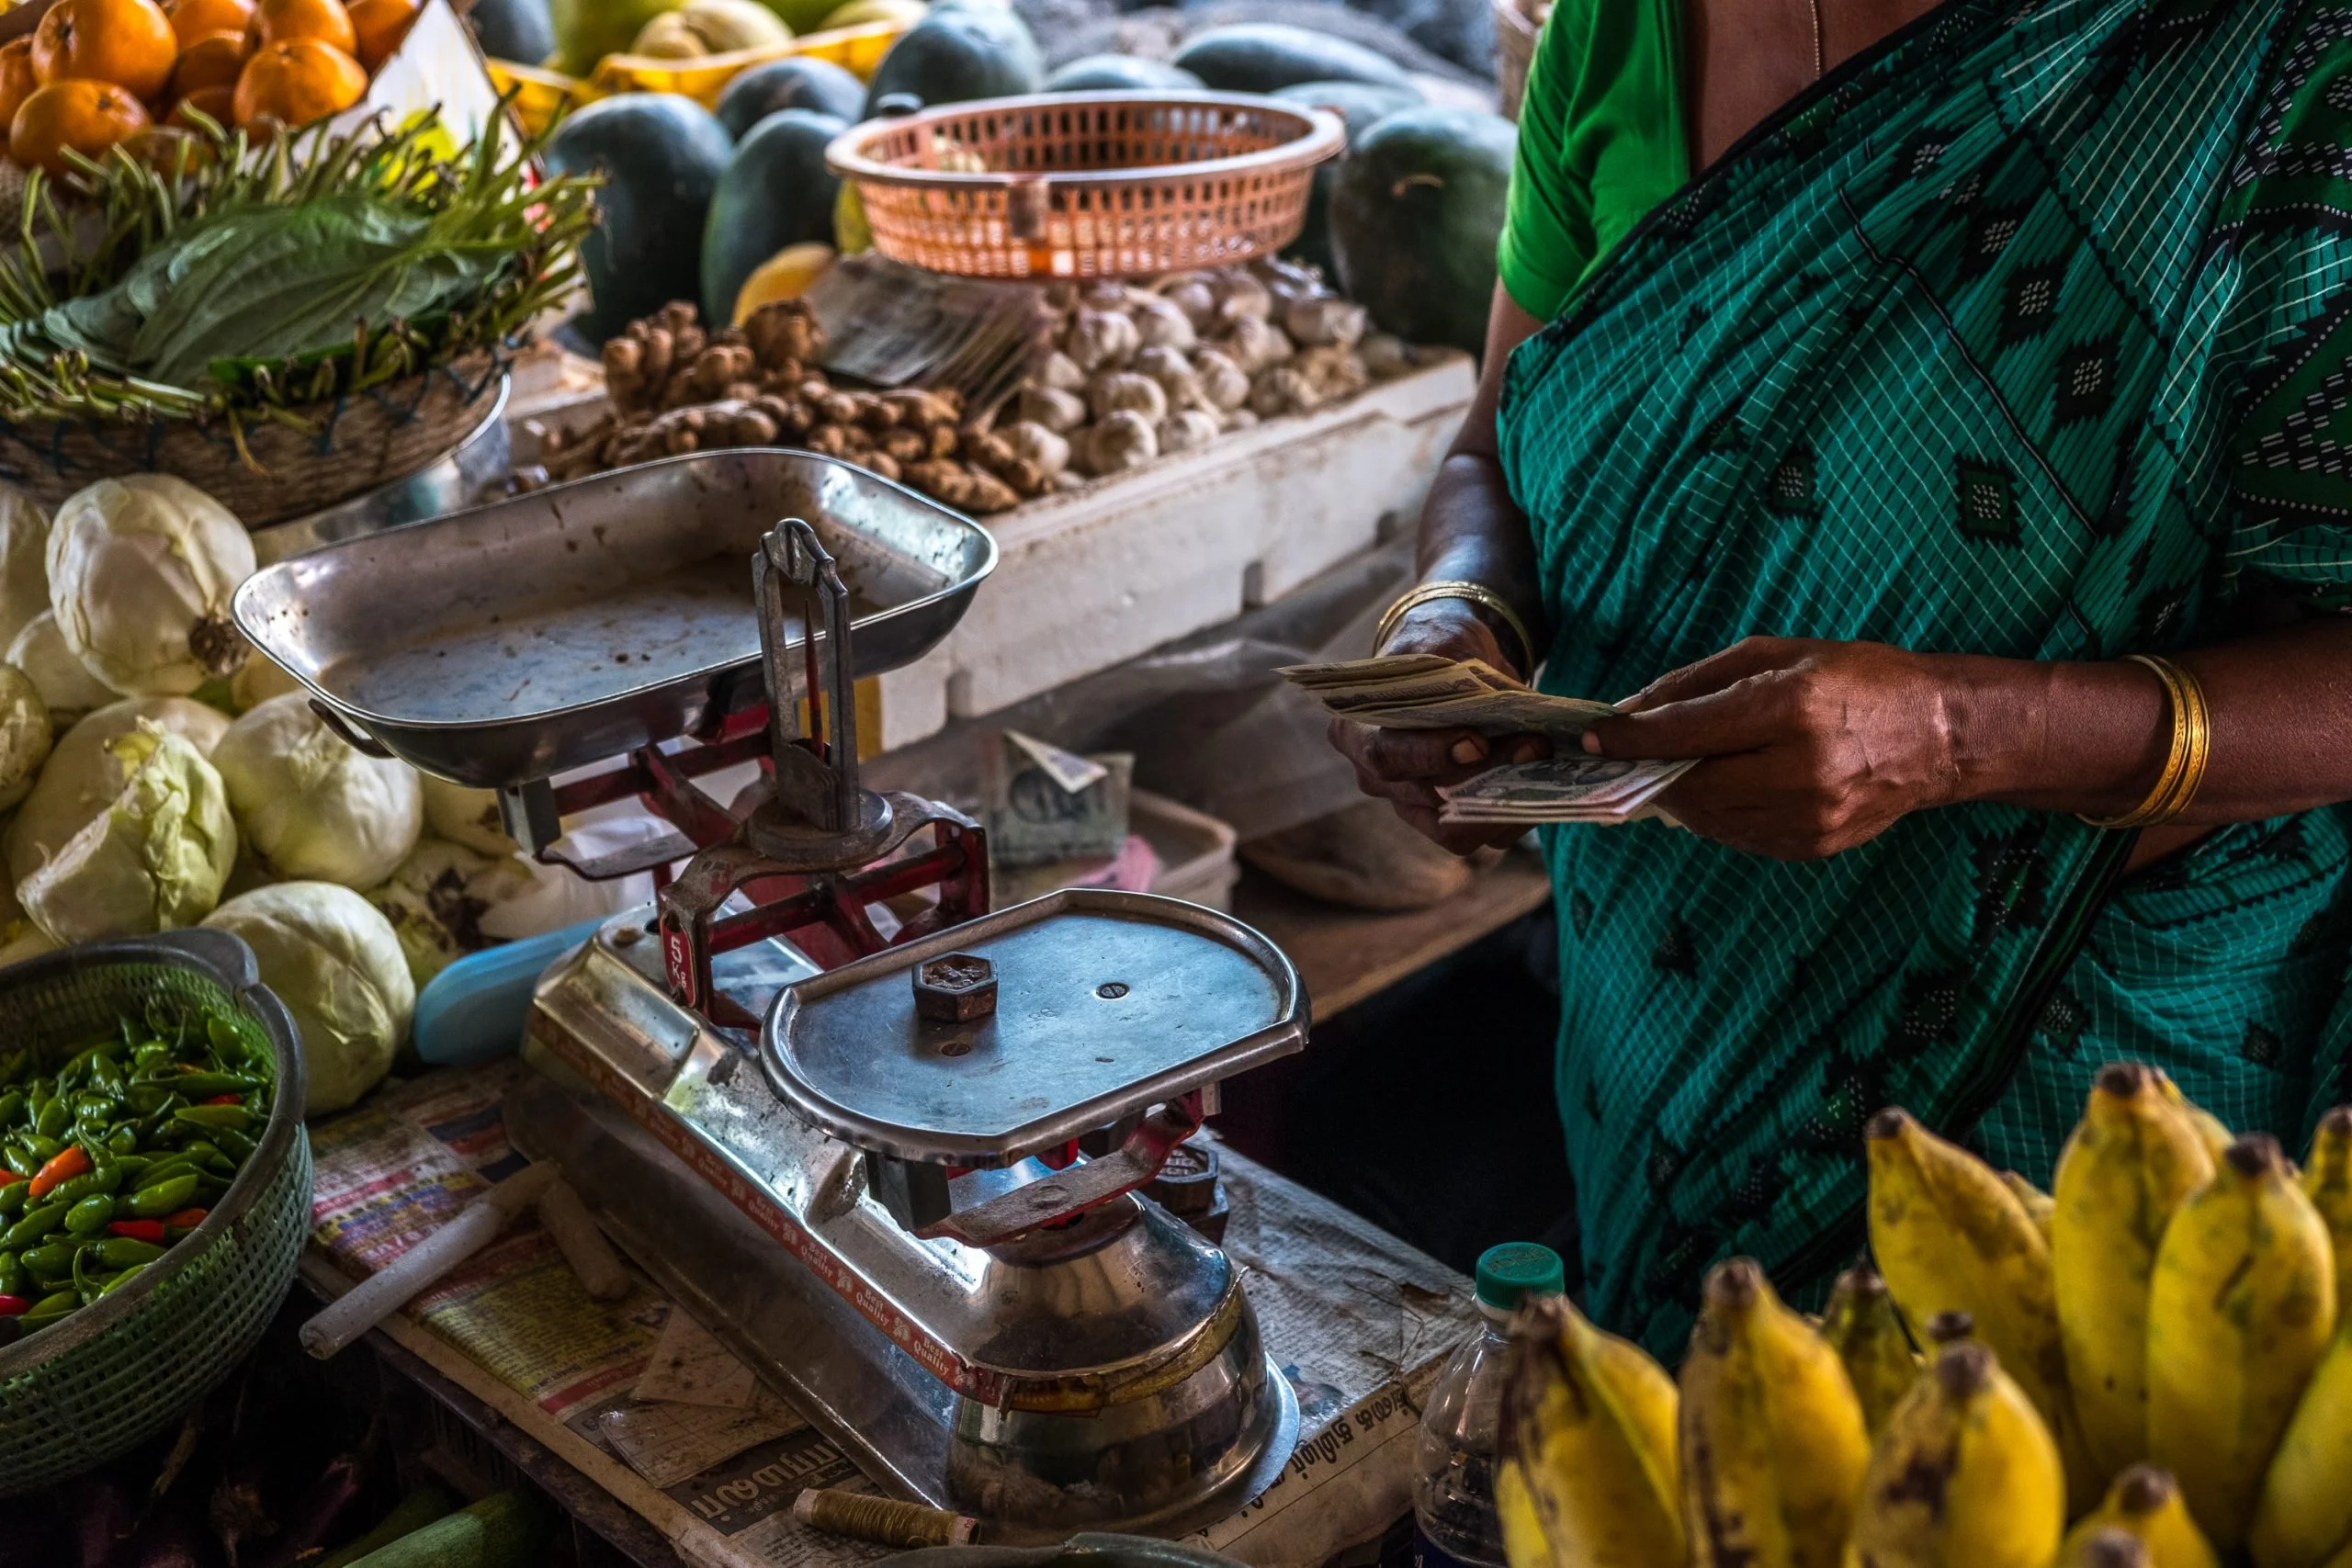 Woman vegetable vendor giving money-microenterprises